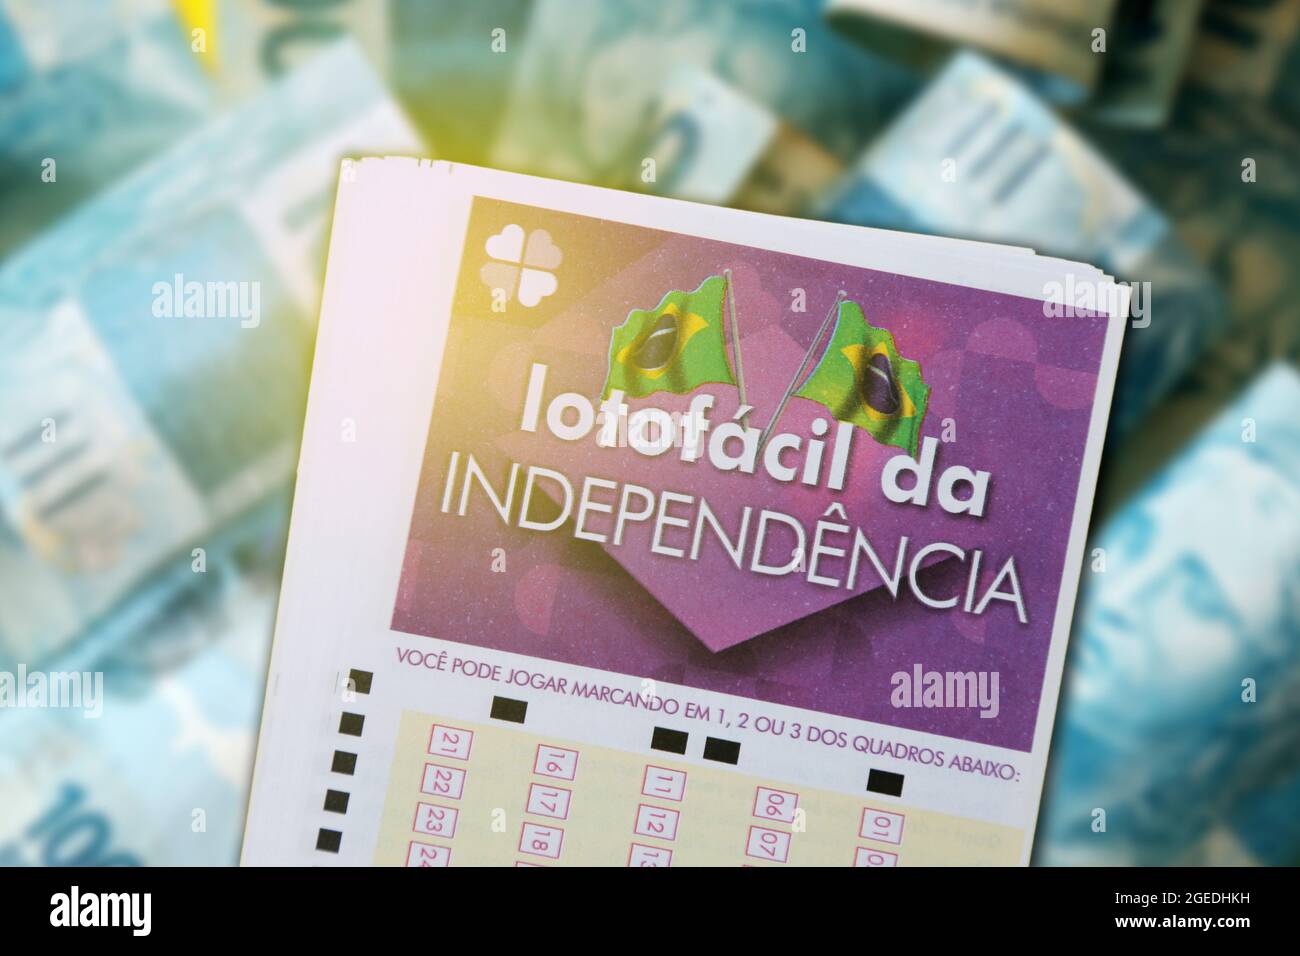 Minas Gerais, Brésil - 19 août 2021 : billet de loterie Caixa Lotofacil da Independencia et espèces Banque D'Images